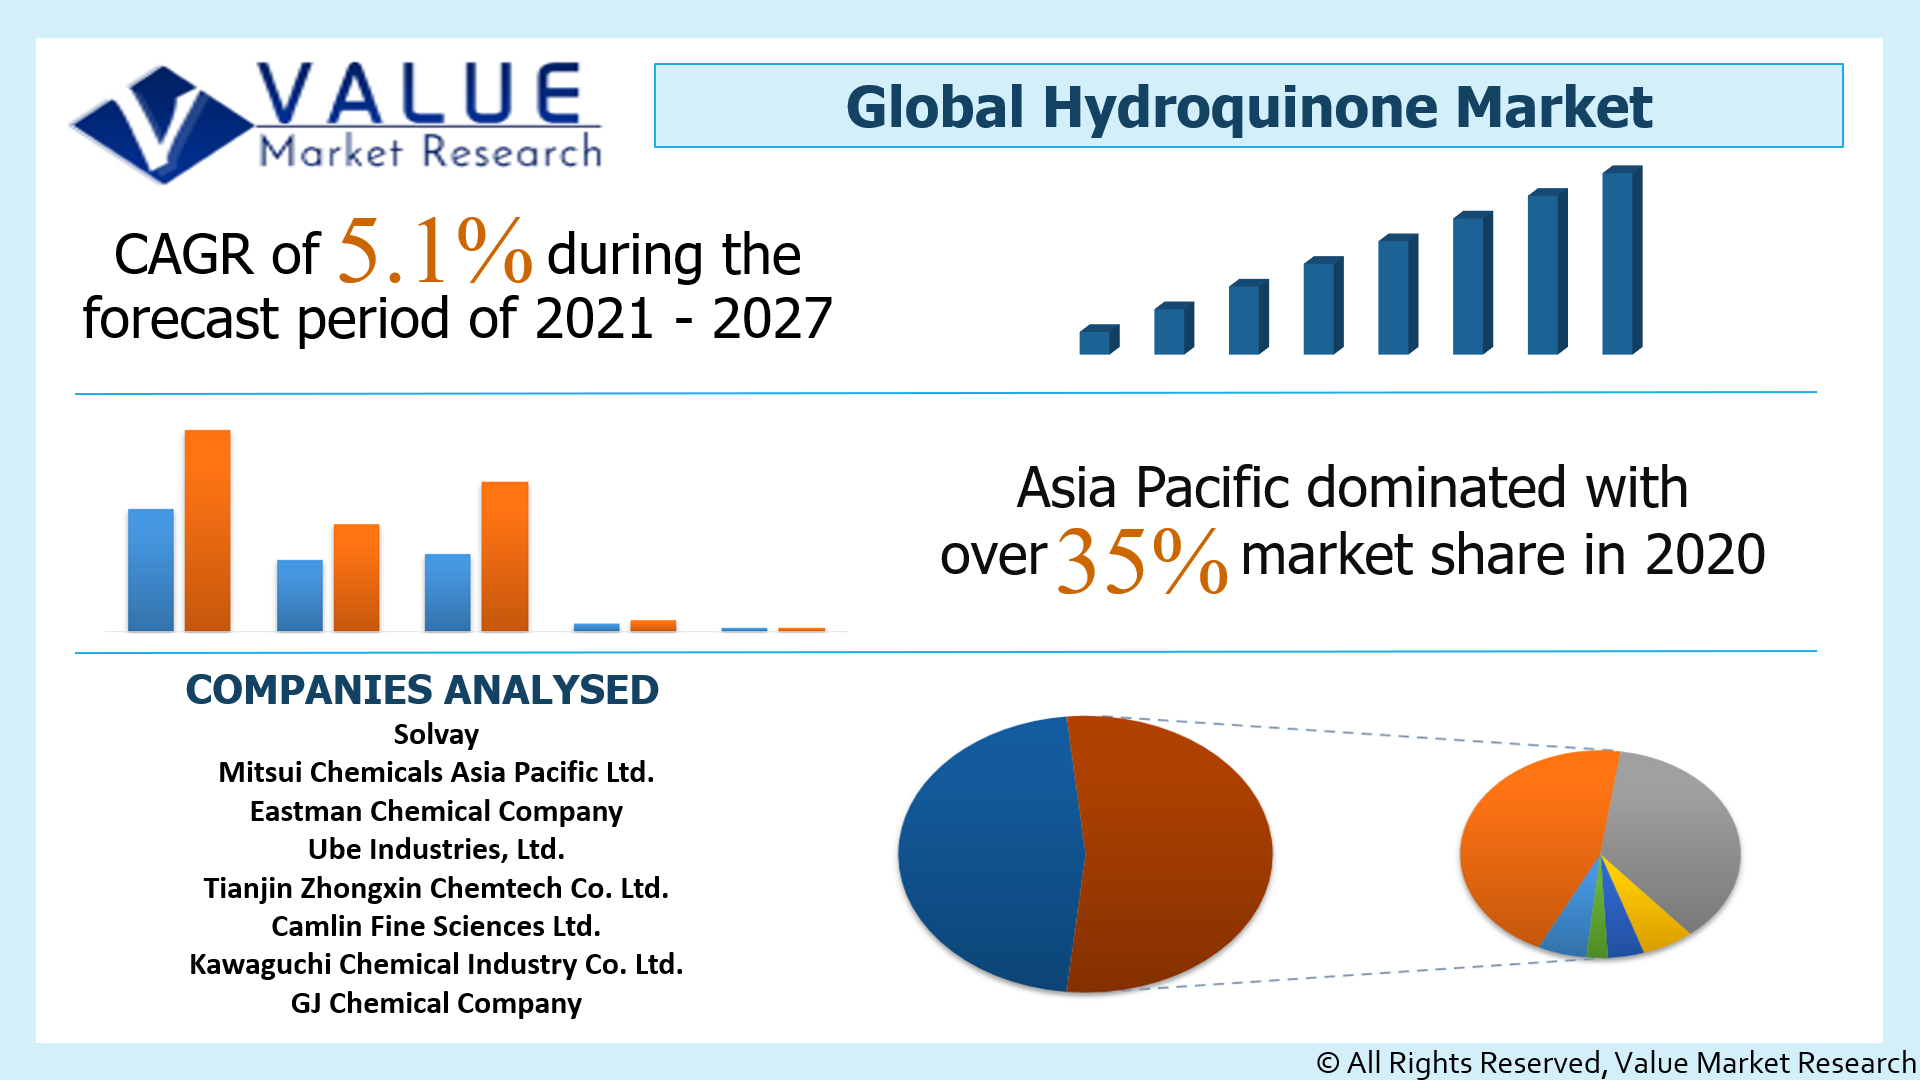 Global Hydroquinone Market Share